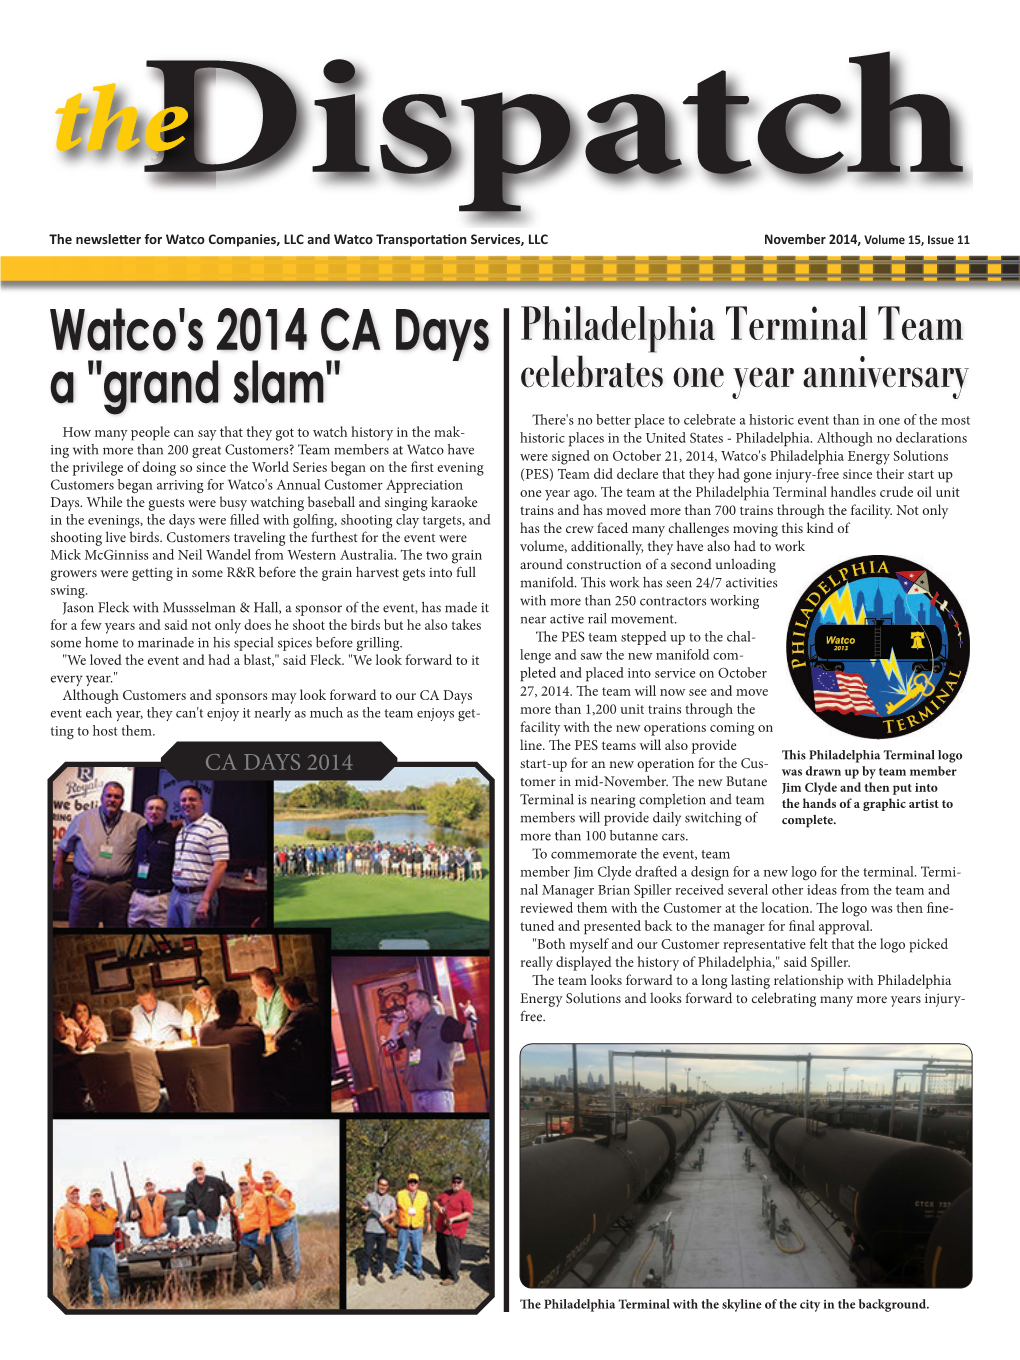 Watco's 2014 CA Days a "Grand Slam"